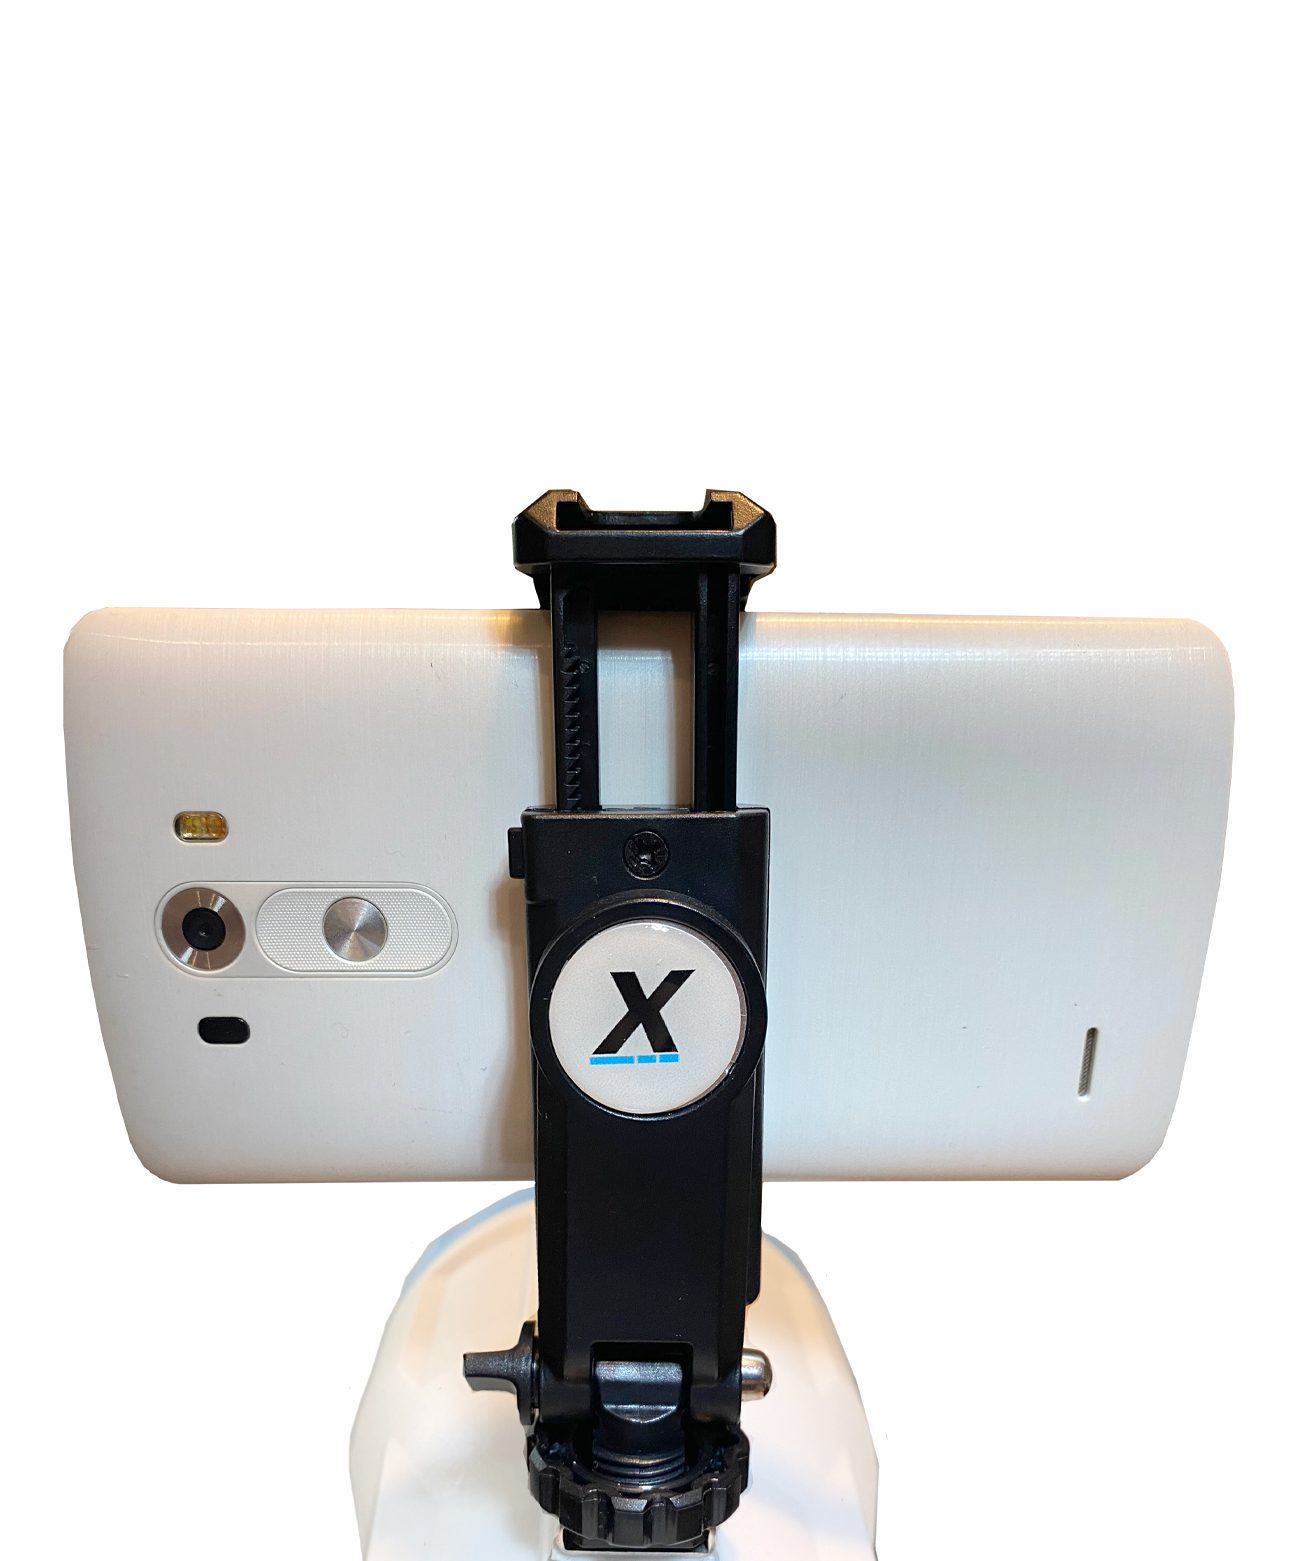 Xanigo Cell Phone Attachment